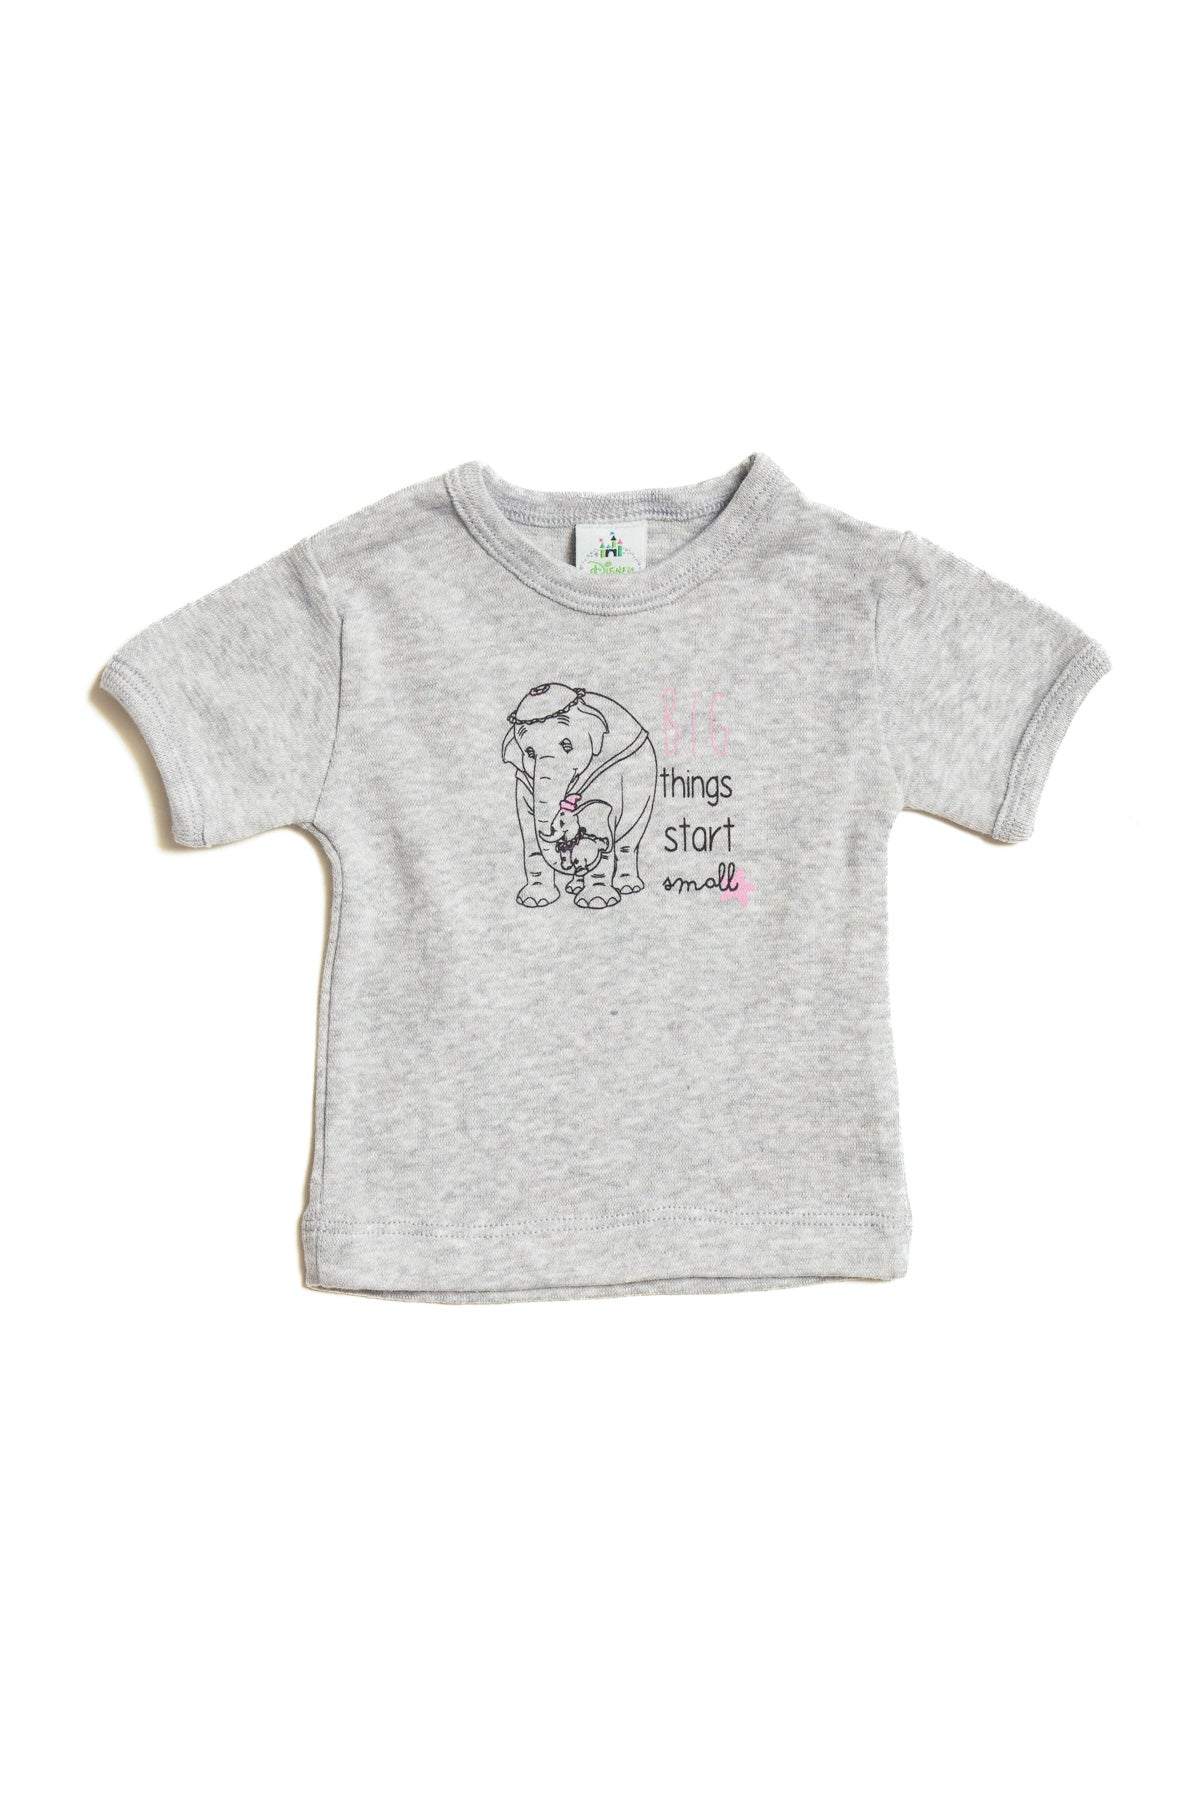 T-Shirt Baby Dumbo  "Big"  Half sleeve 4020